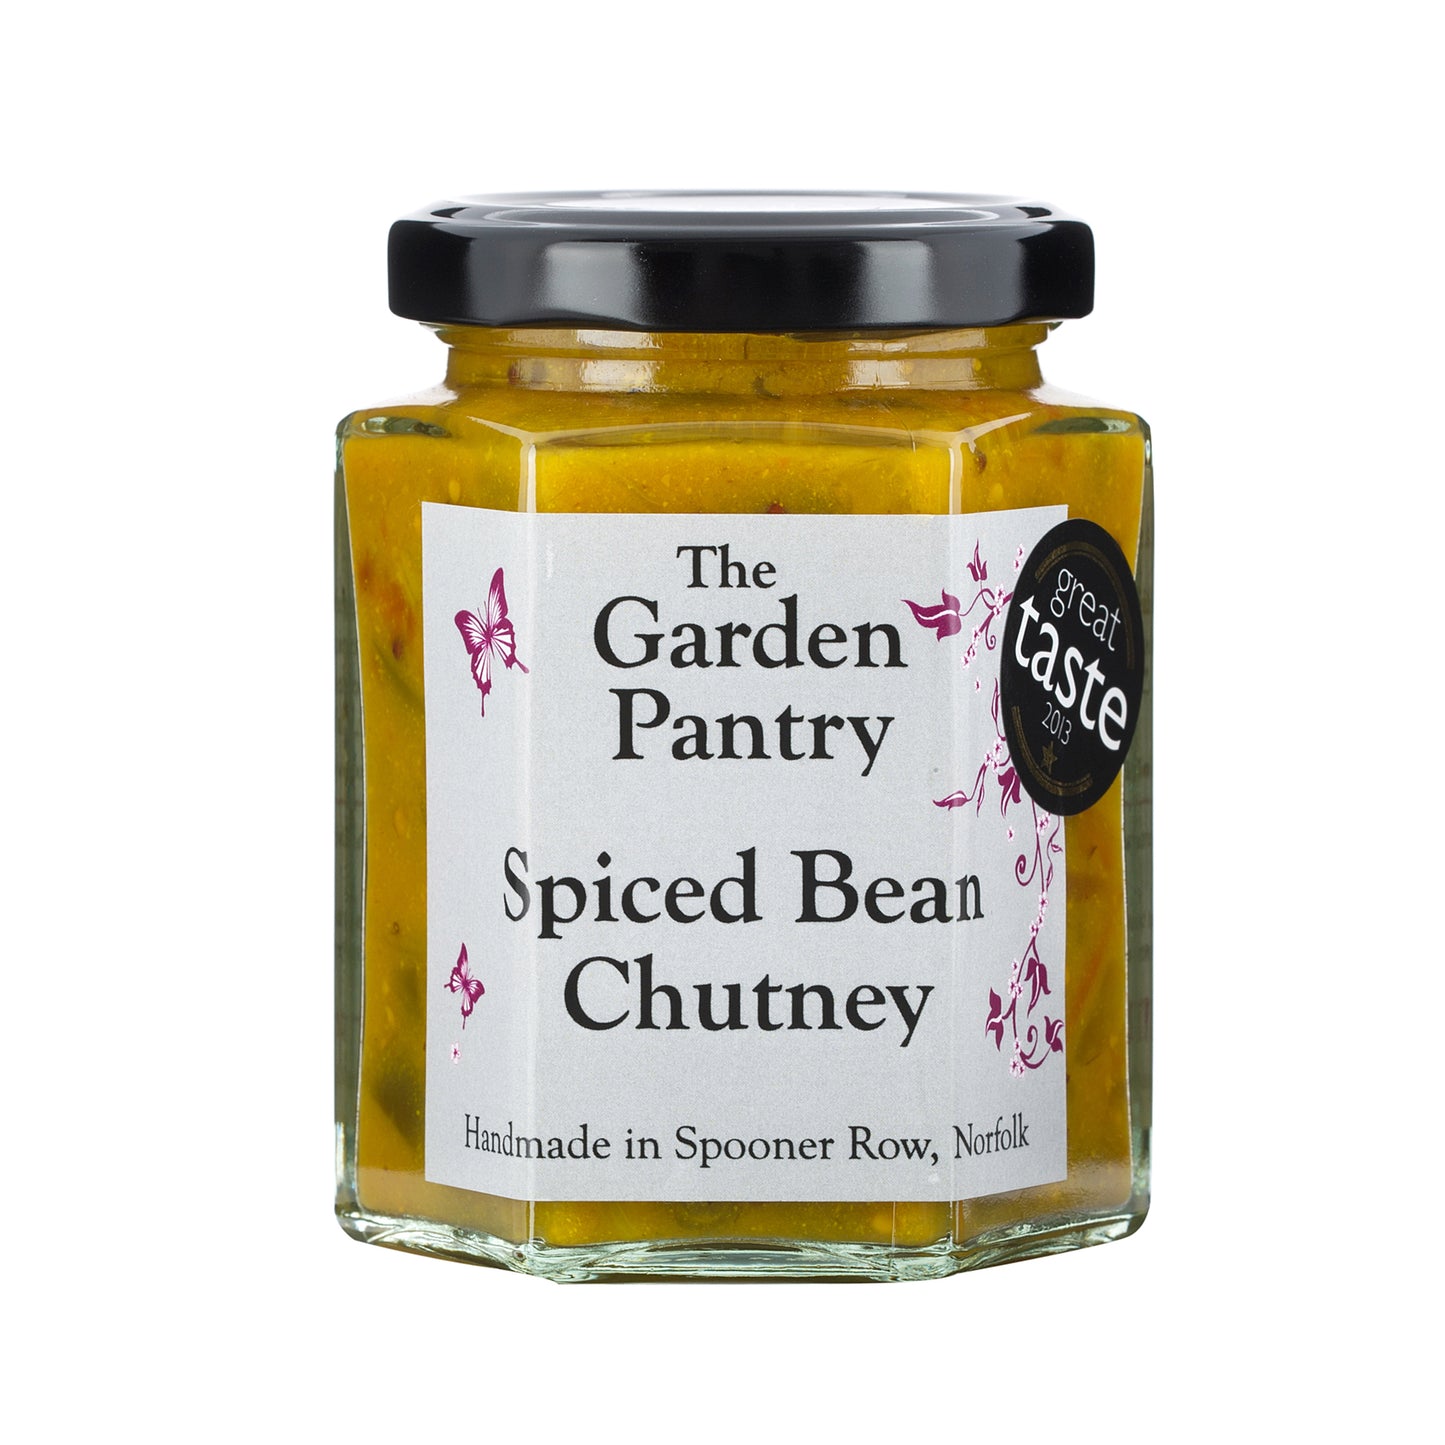 The Garden Pantry Spiced Bean Chutney